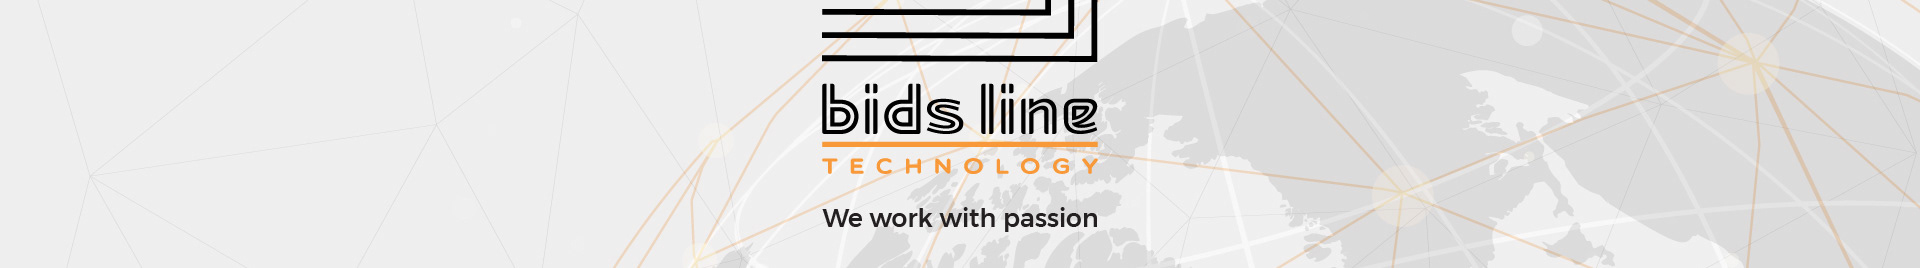 bidsline technology's profile banner